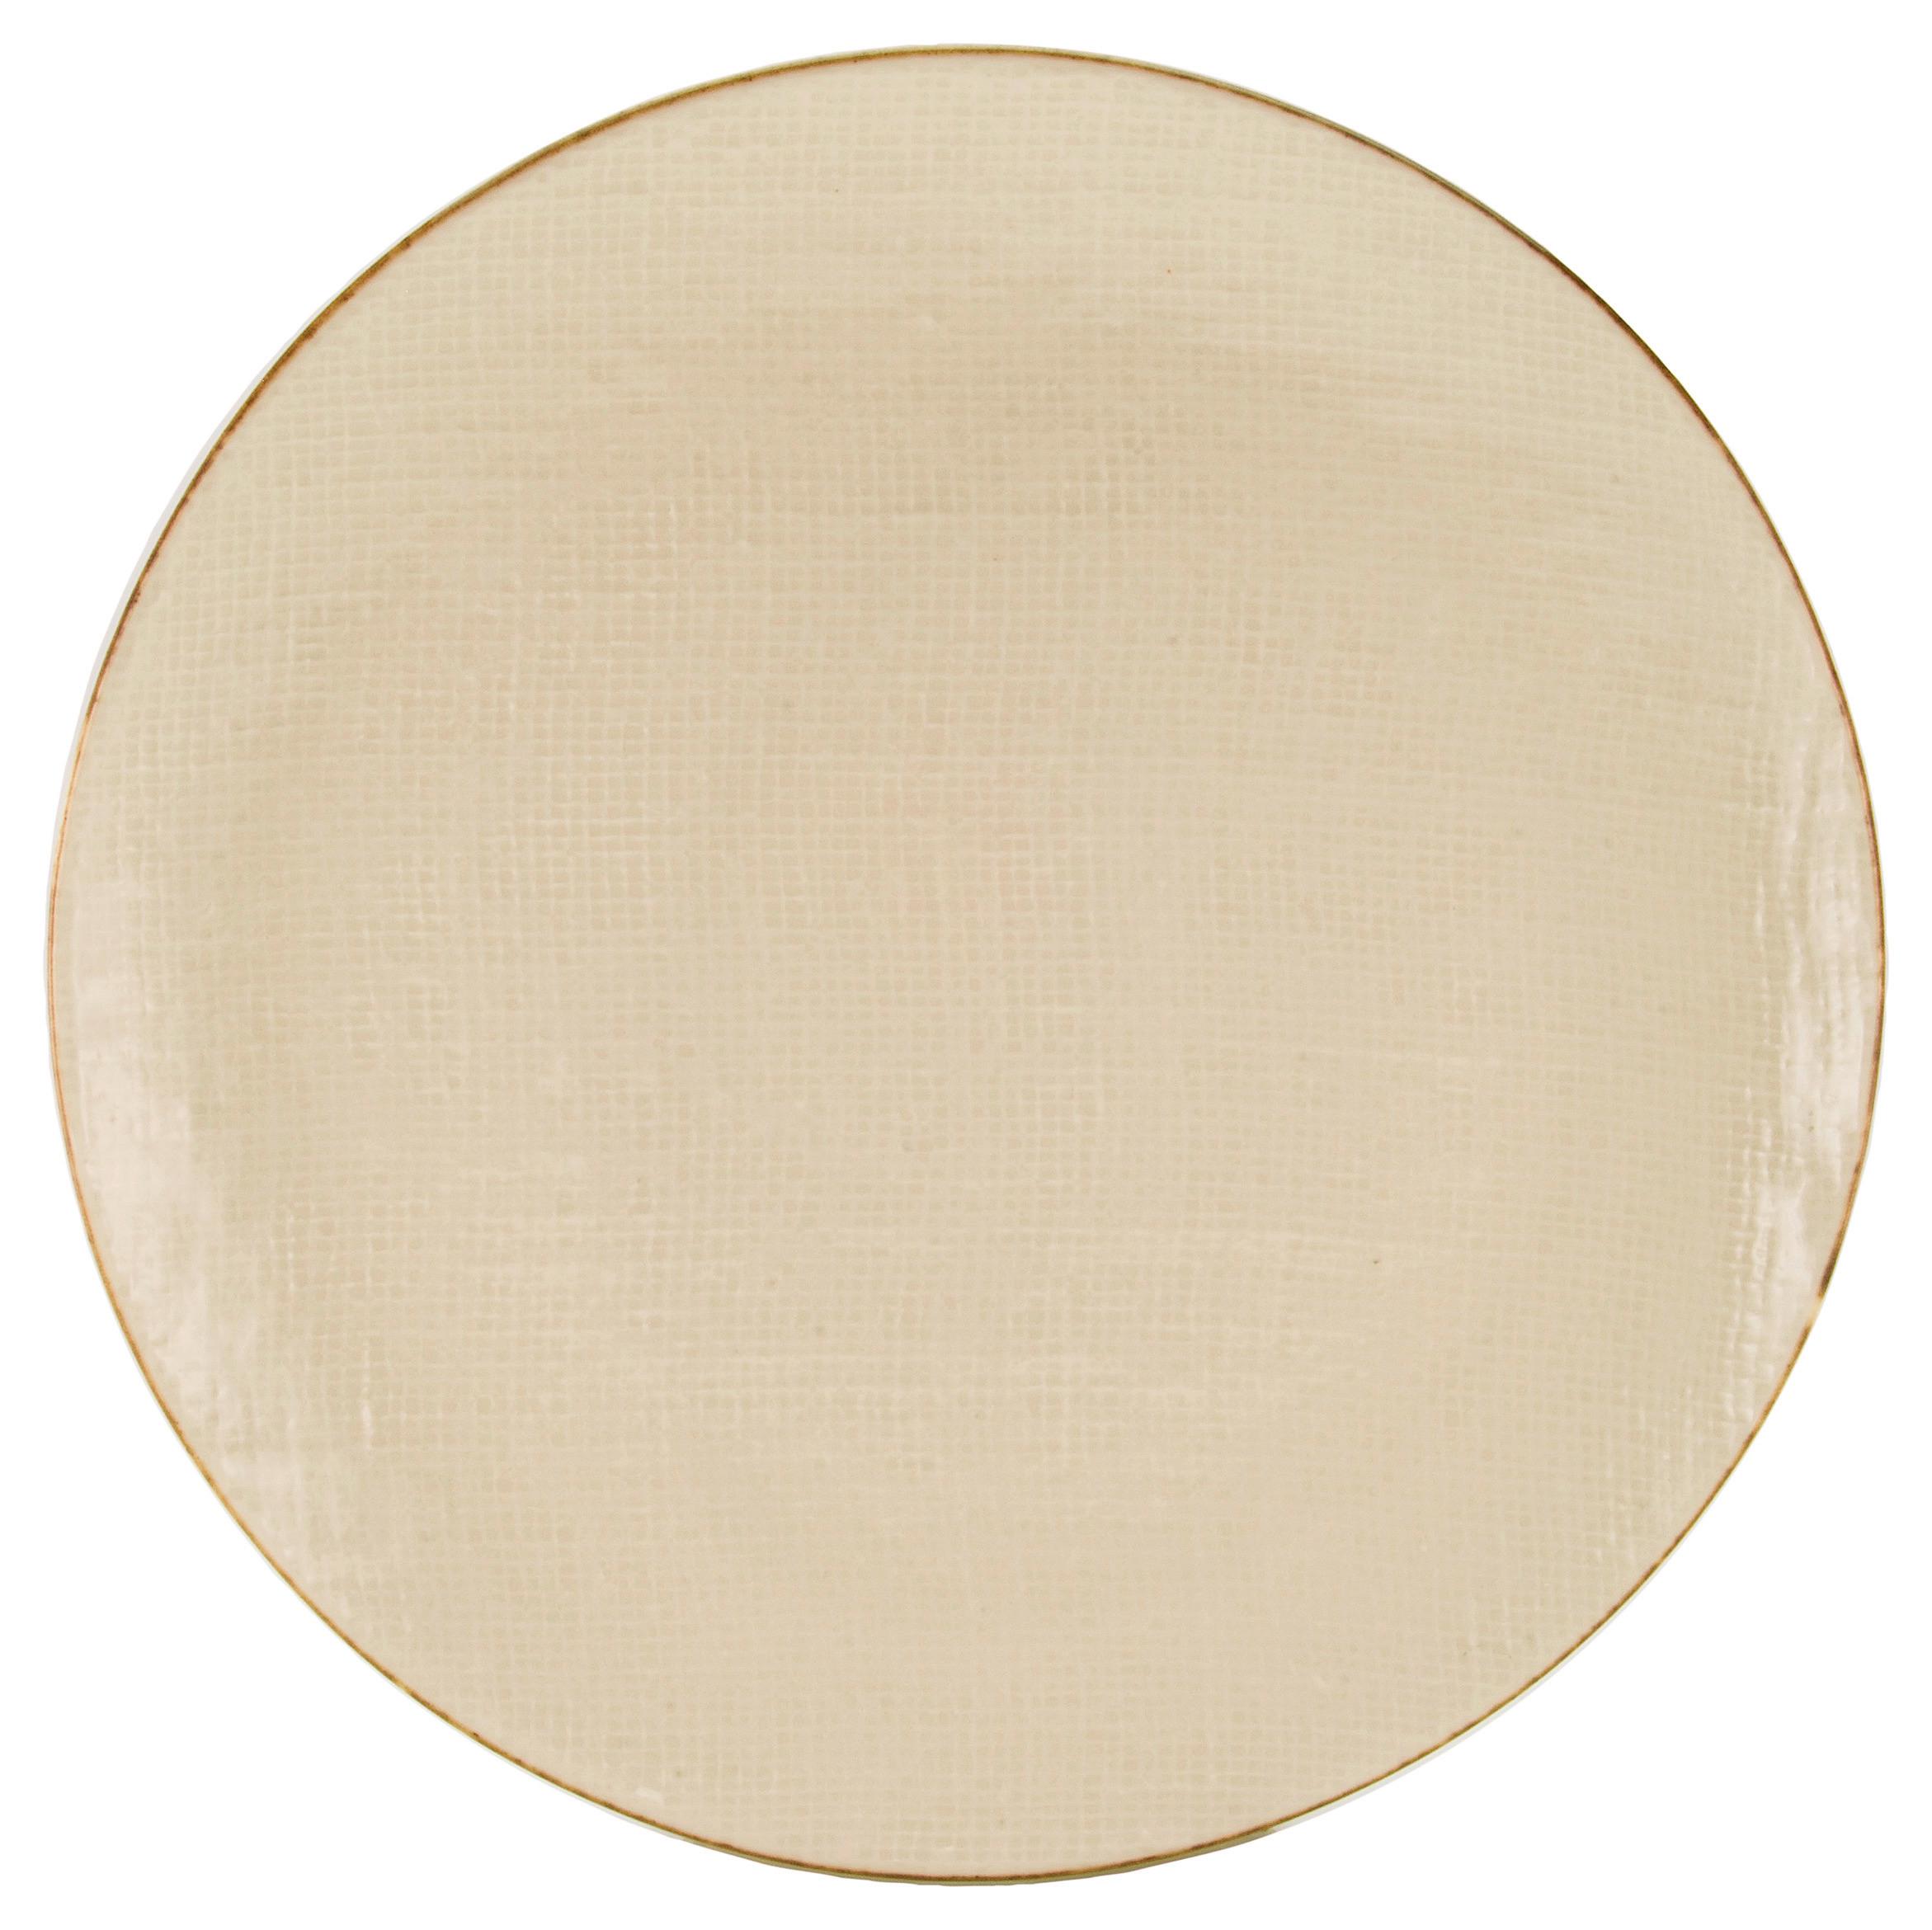 Tanjur Plitki Canvas - bijela/krem, keramika (28/28/3cm) - Premium Living